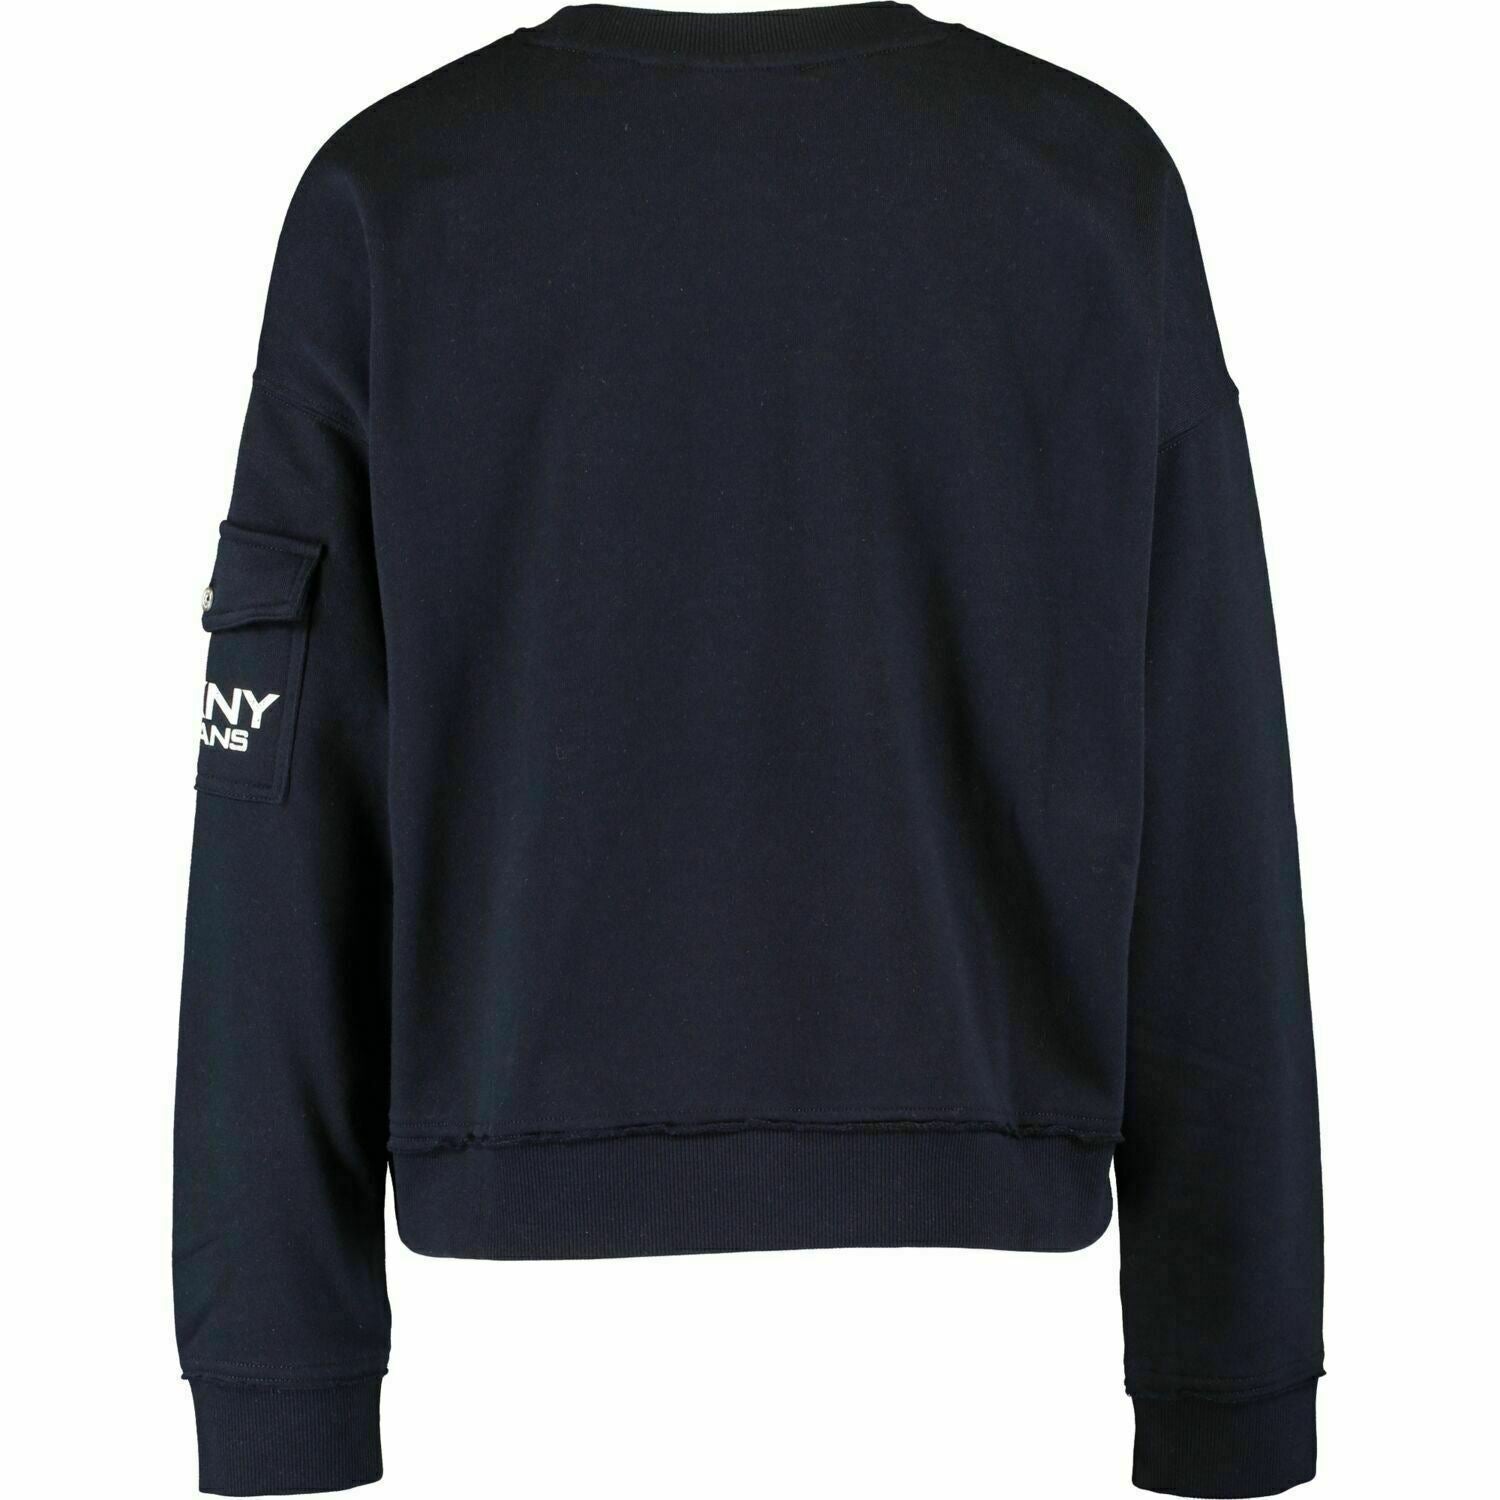 DKNY Women's Pocket Sleeve Boxy Sweatshirt, Navy Blue, size L